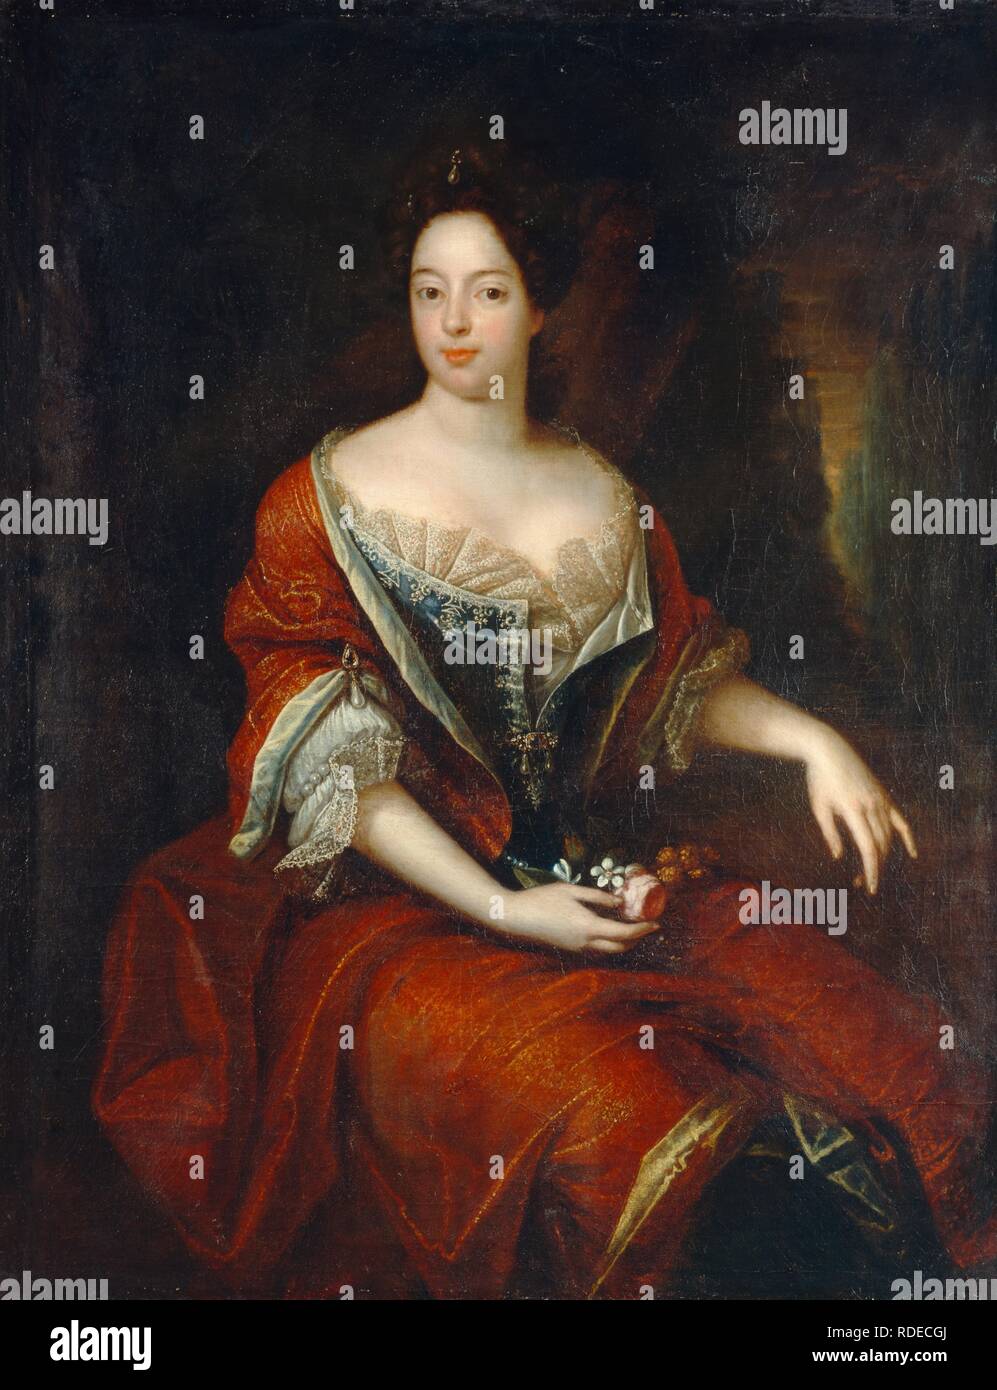 Sophia Charlotte de Hannover (1668-1705), reina consorte de Prusia. Museo: Stiftung Preußische Schlösser und Gärten Berlin-Brandenburg. Autor: Jouvenet, Nöel, III. Foto de stock